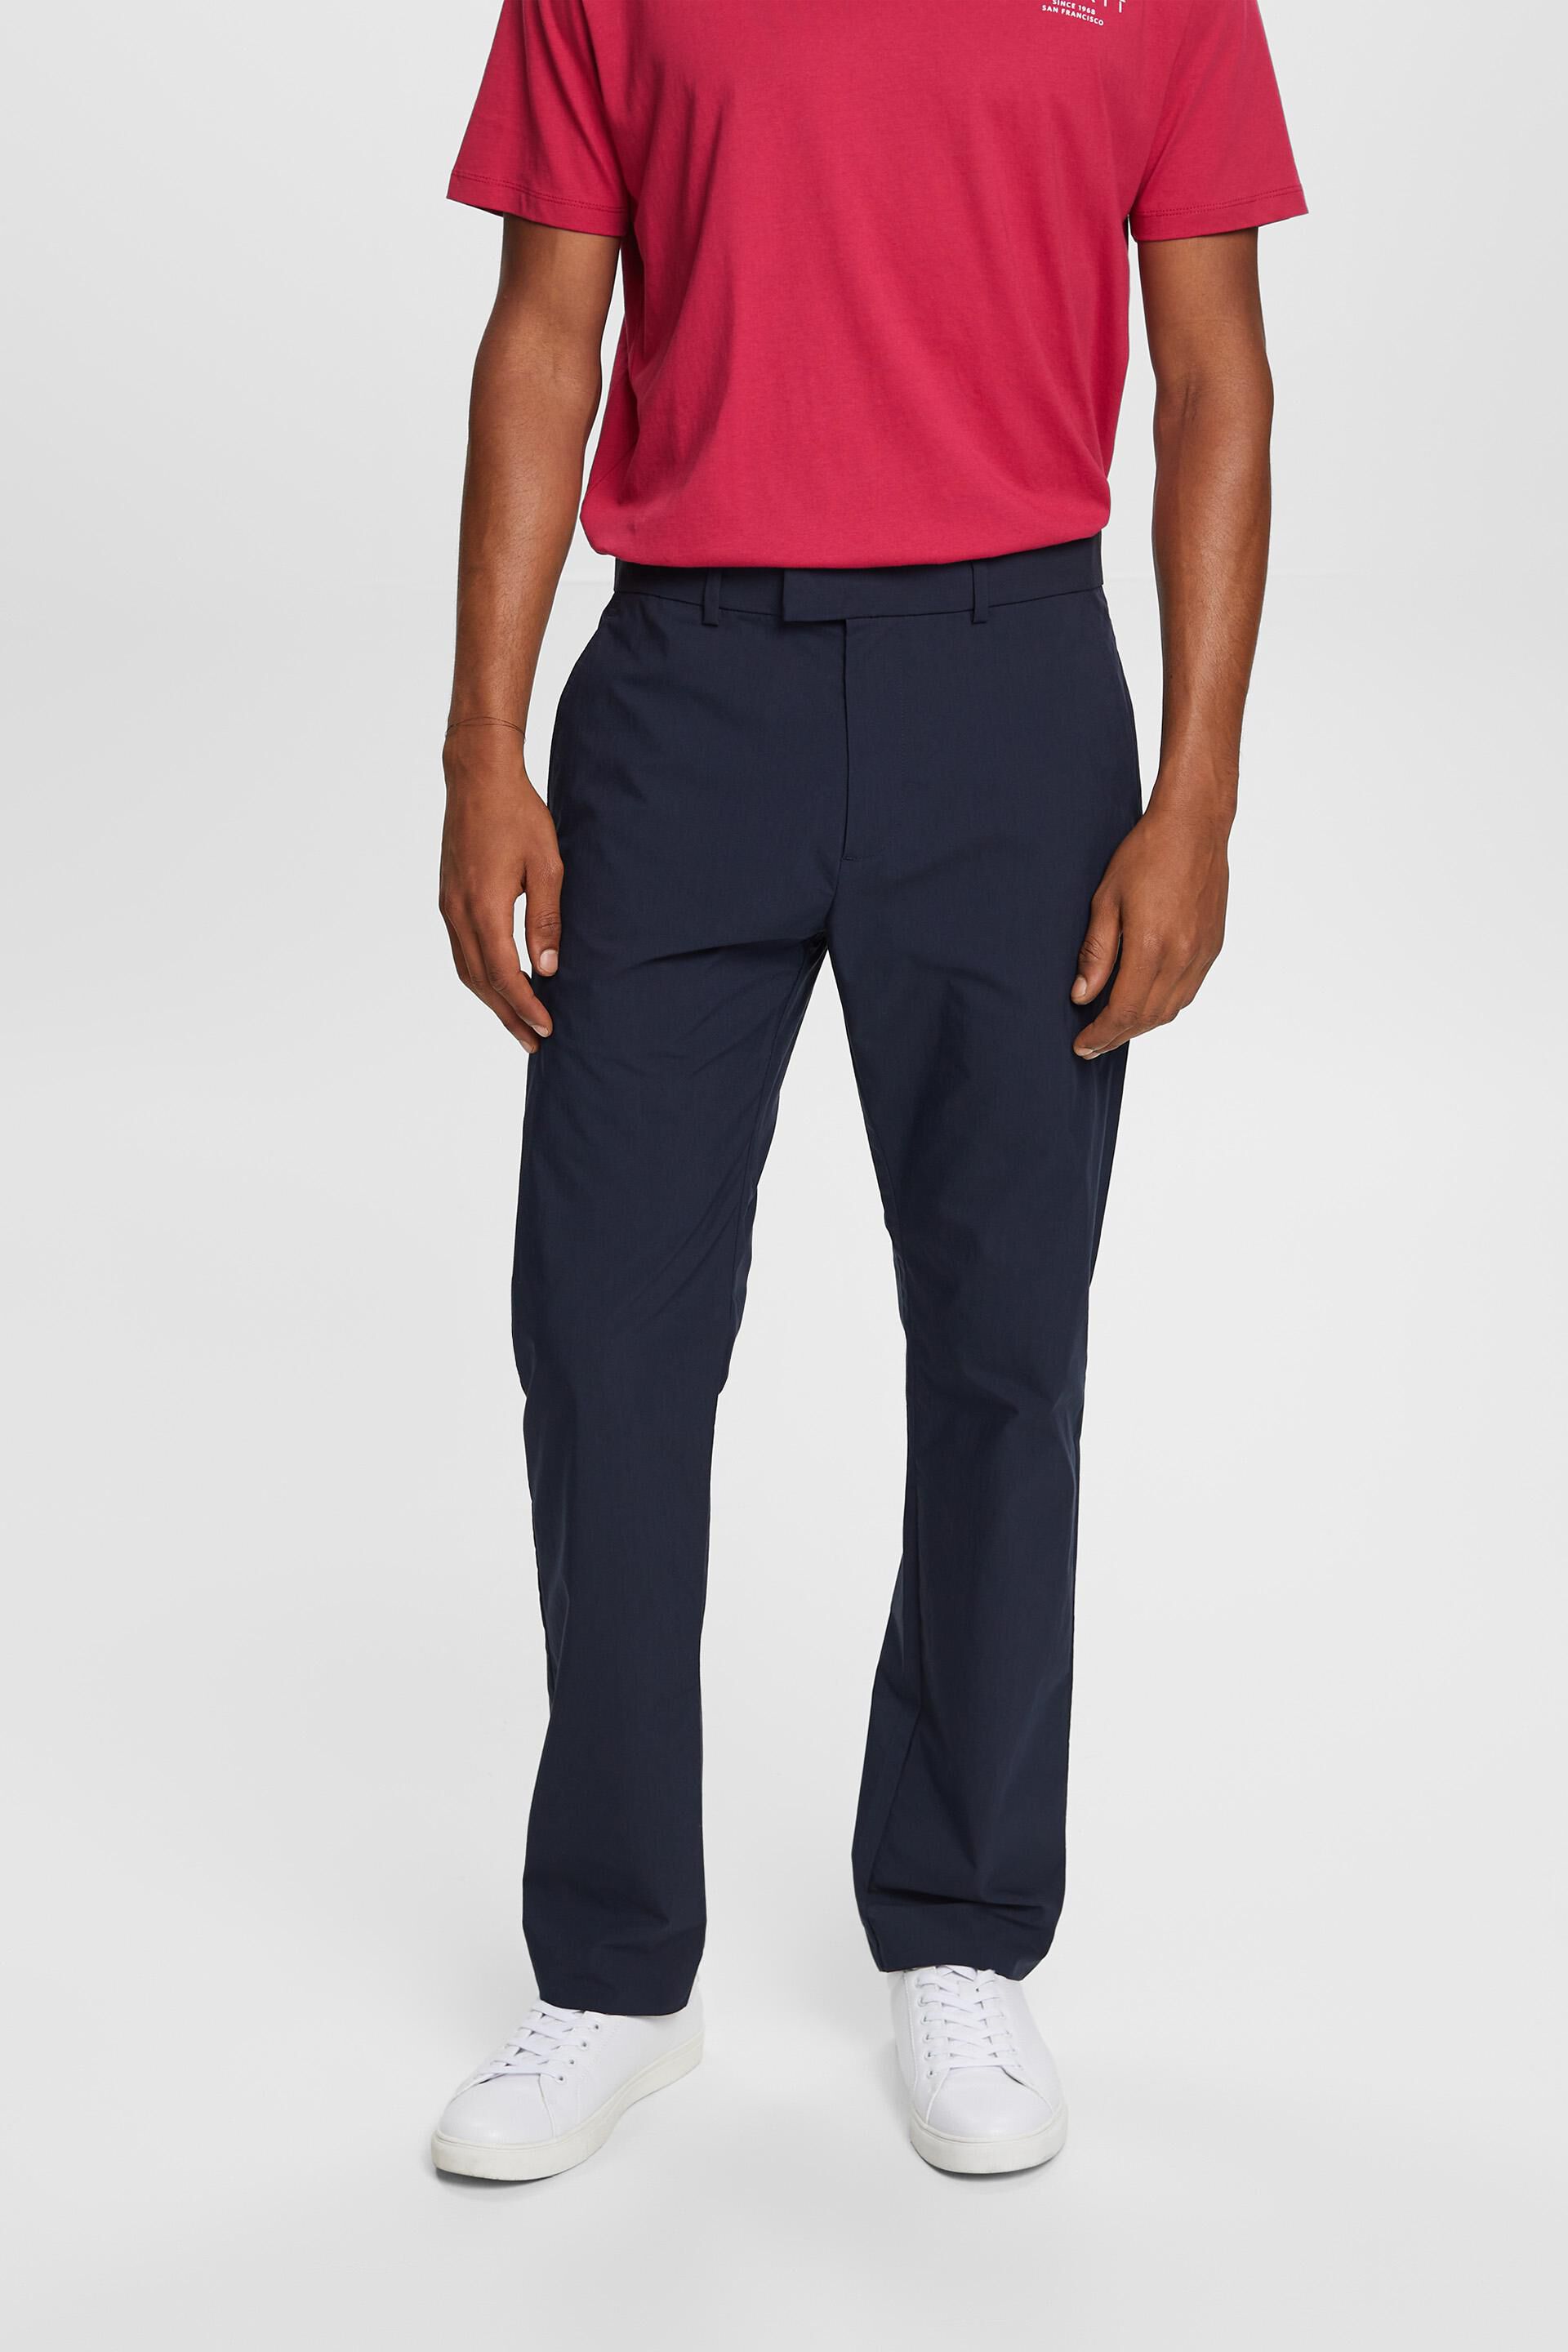 Esprit Lightweight blend trousers, chino cotton